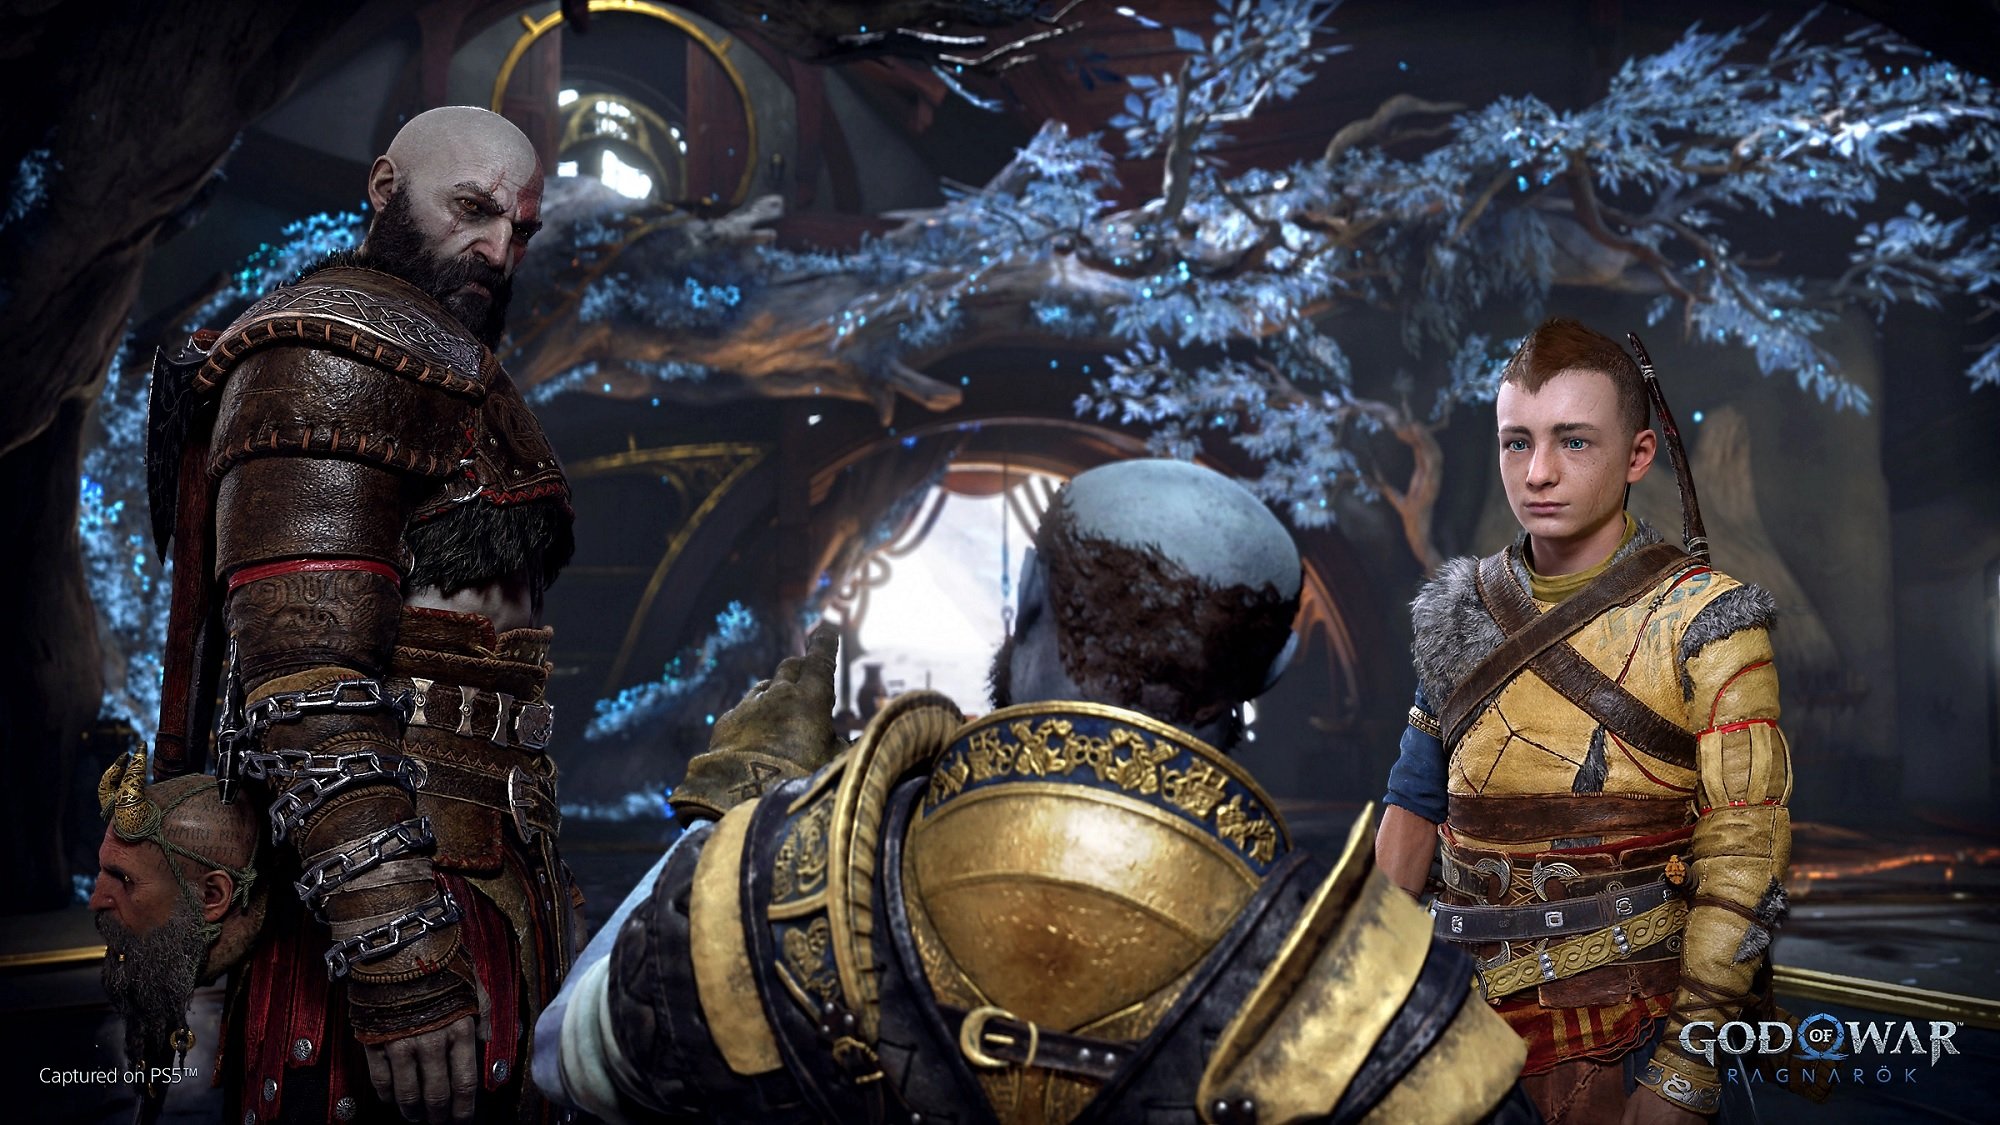 Better Augment rib Xbox boss Phil Spencer's most anticipated game is God of War Ragnarök | VGC